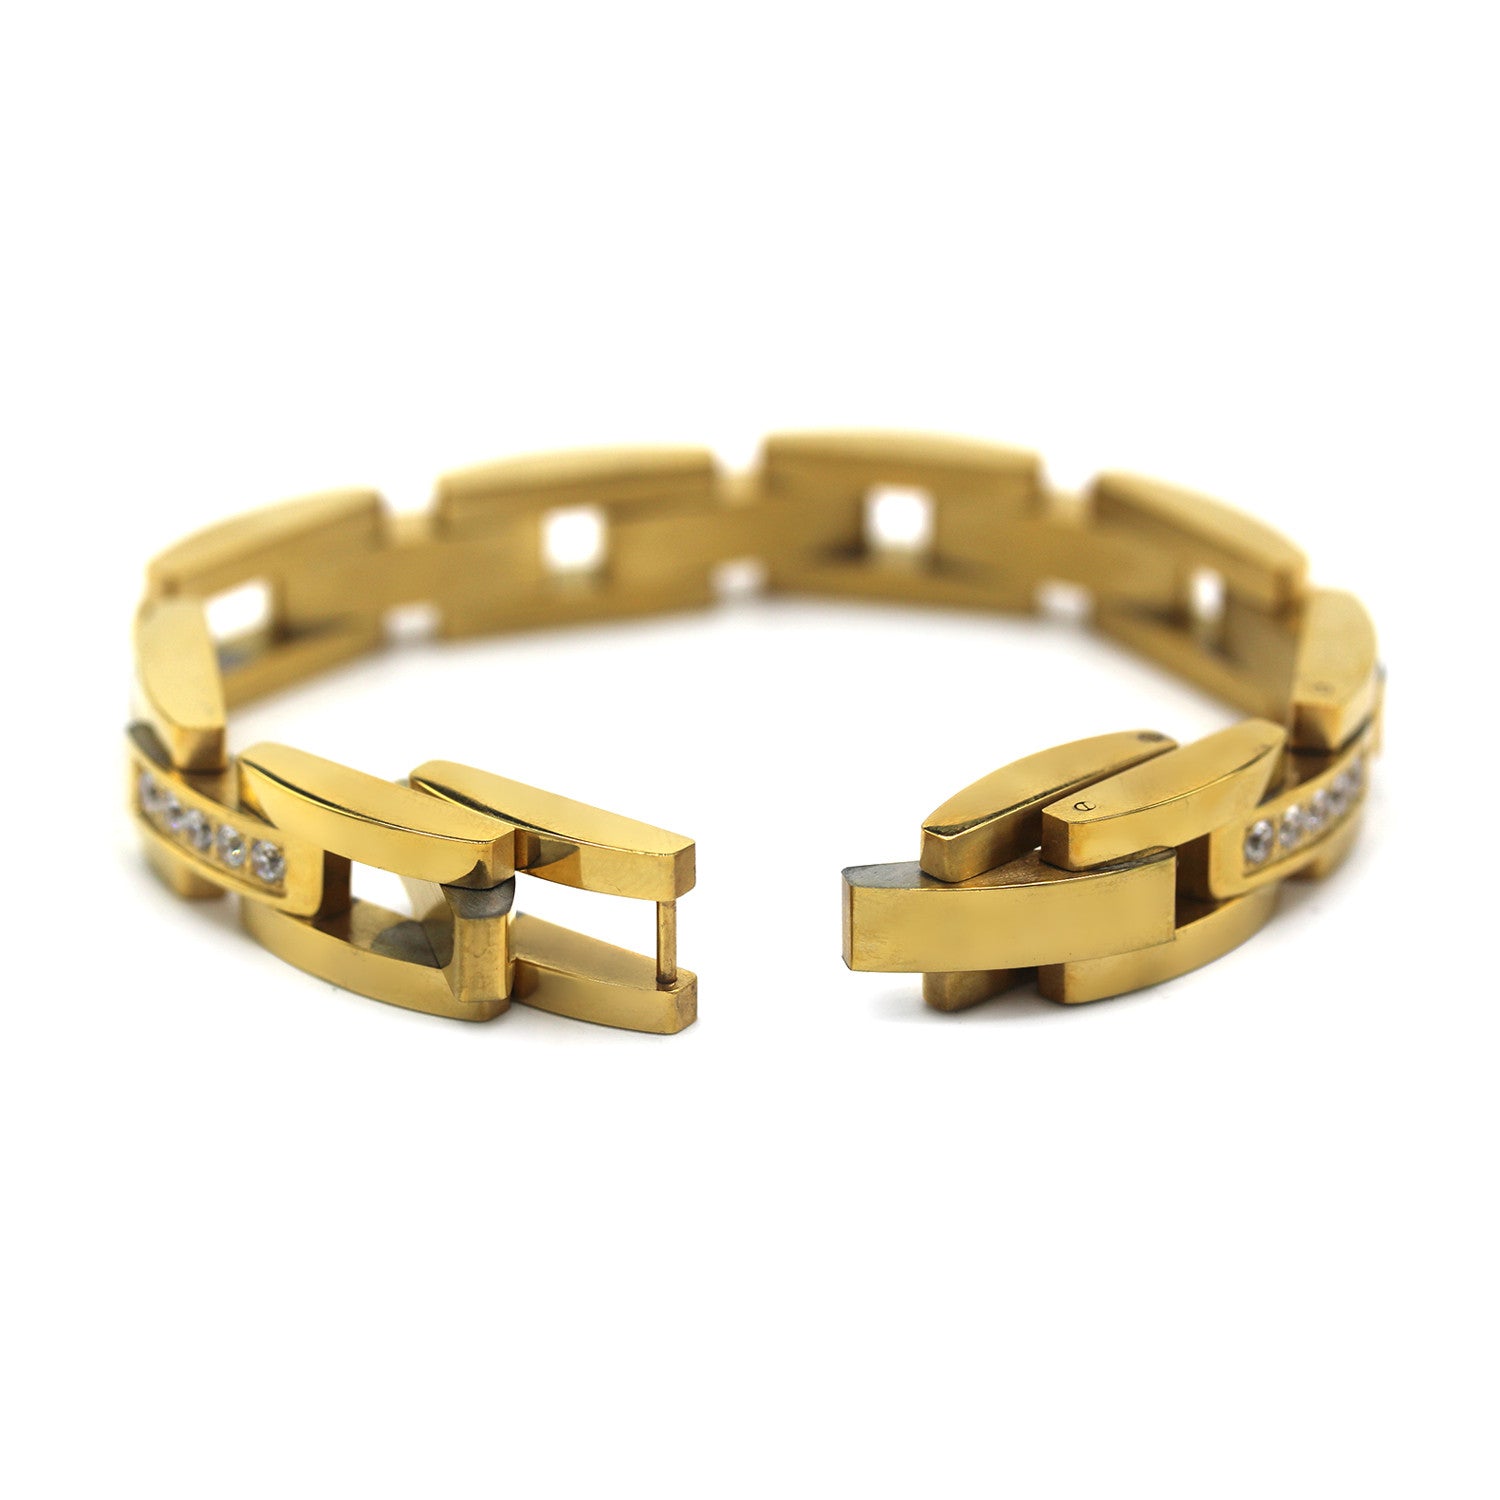 Elaborate Men’s Stainless Steel Bracelet Fashion Wrist Band CZ (Gold)